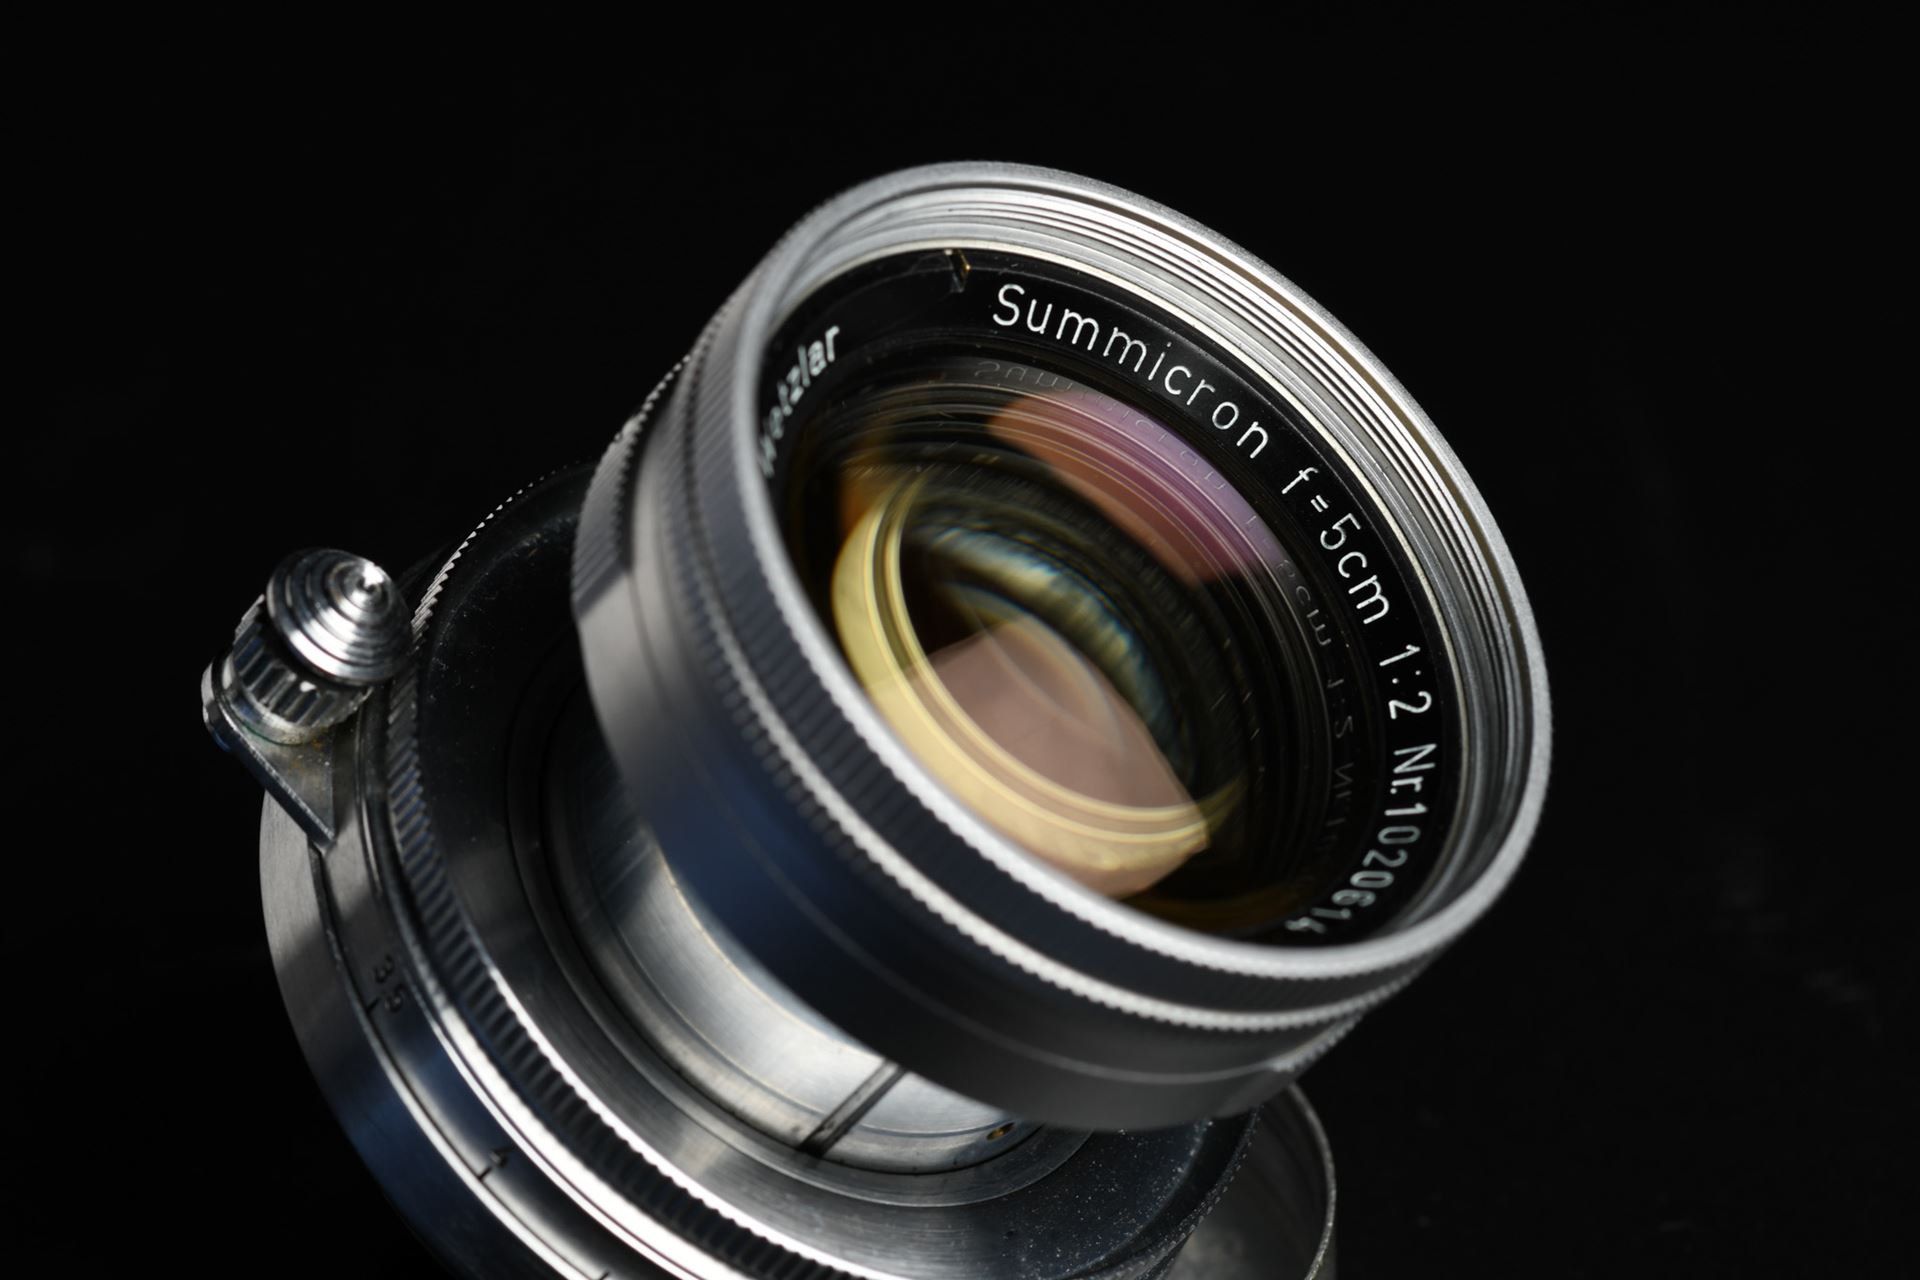 Picture of Leica Summicron 5cm f/2 Radioactive Yellow Glass Screw Mount LTM L39